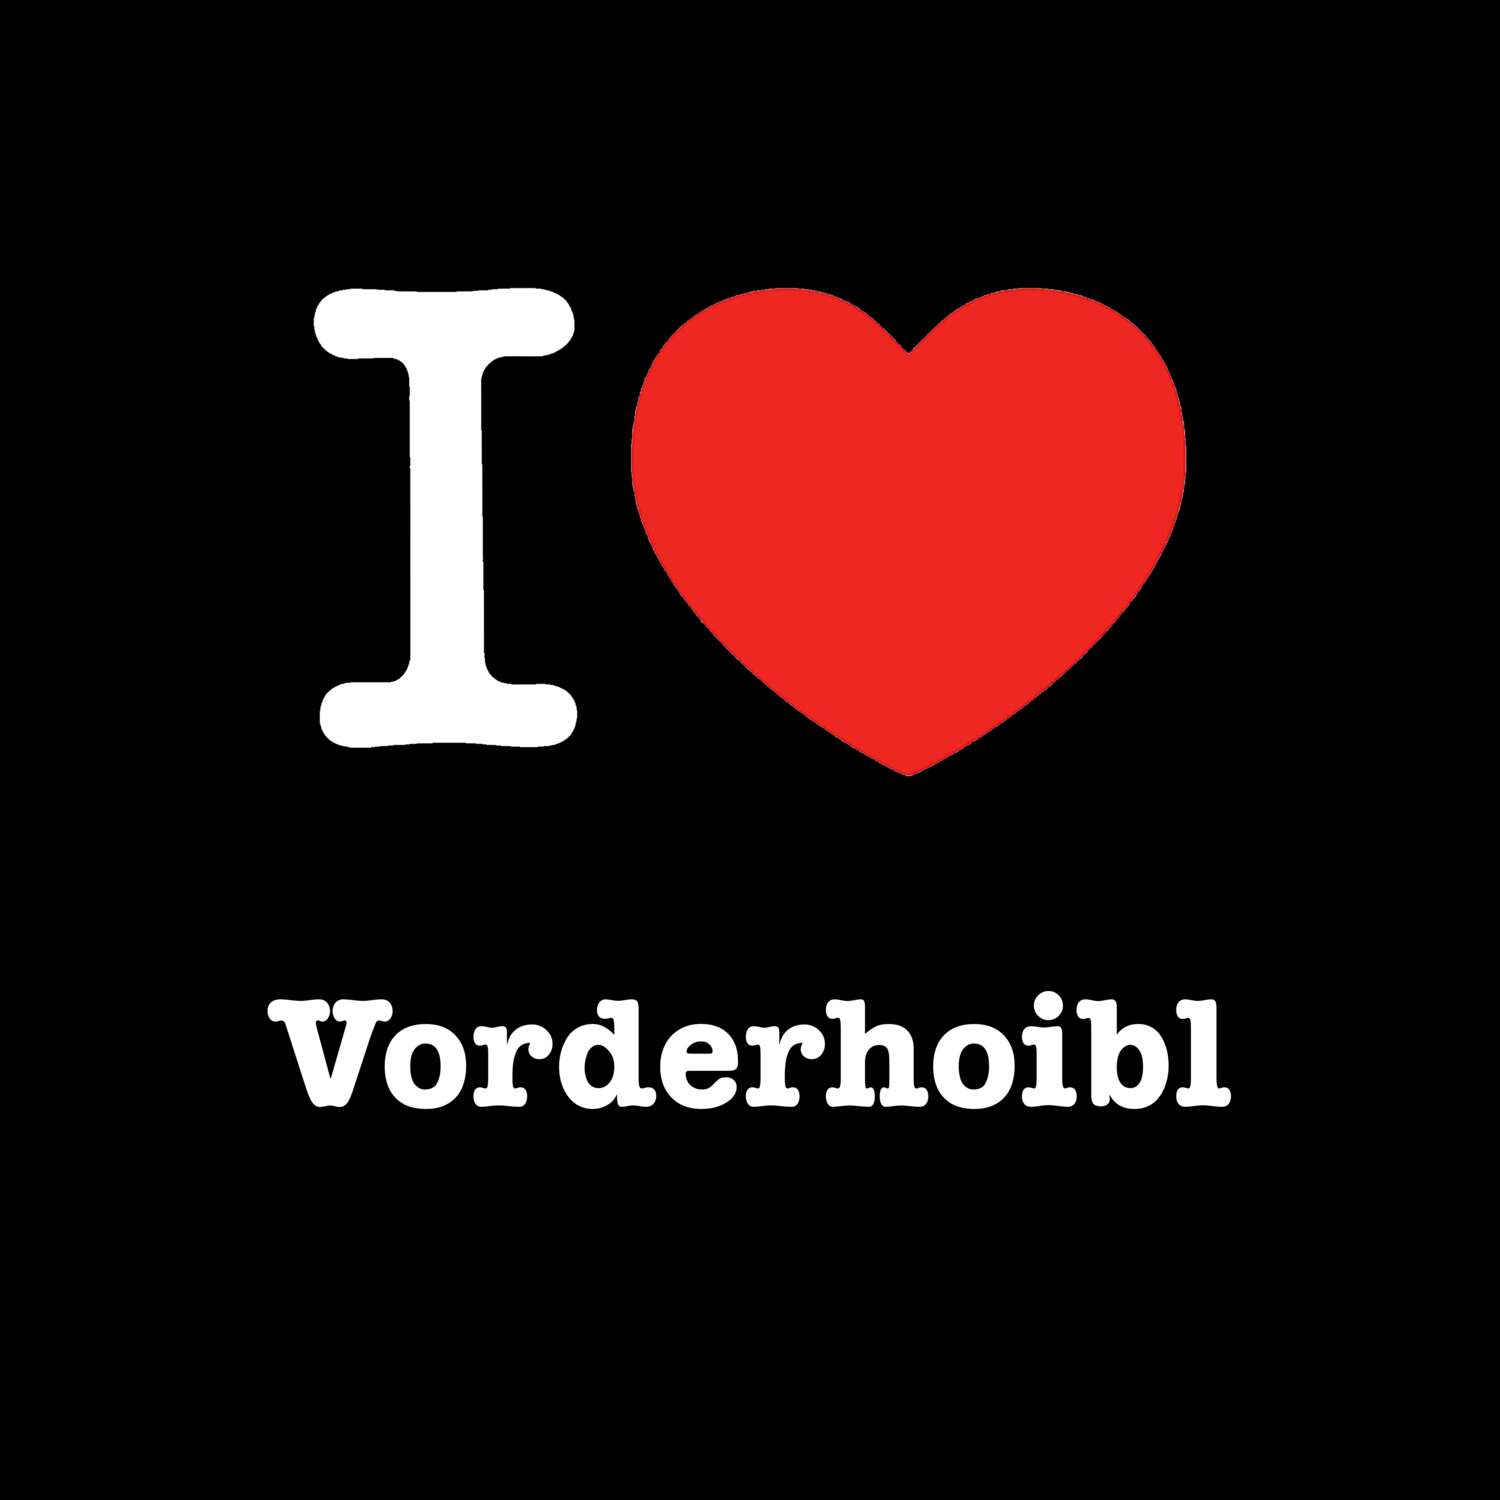 Vorderhoibl T-Shirt »I love«